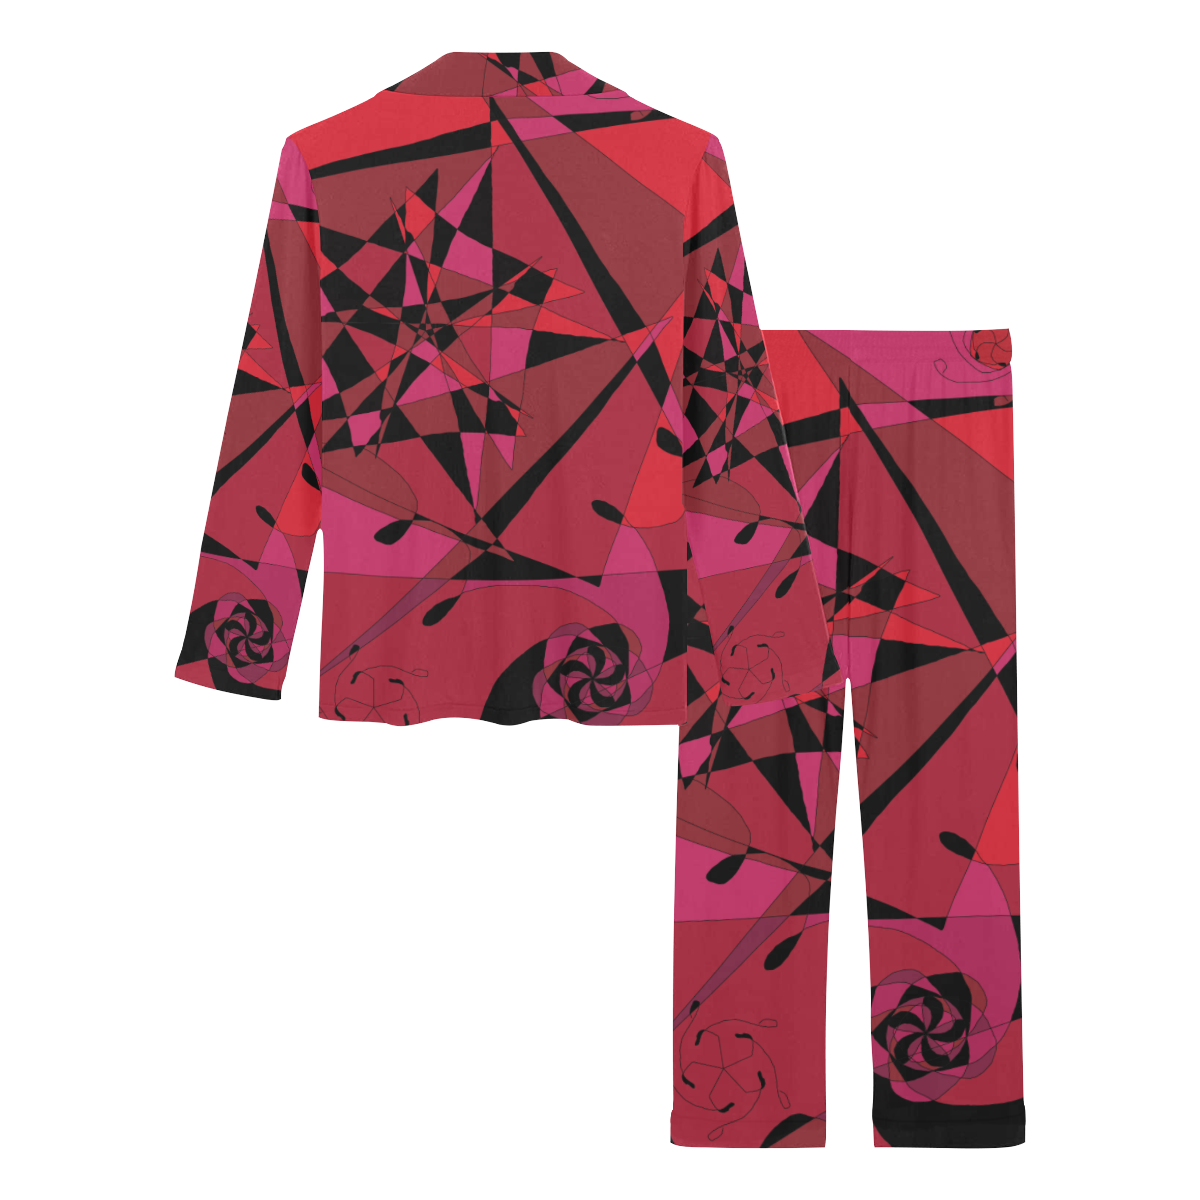 Abstract #8 S 2020 Women's Long Pajama Set